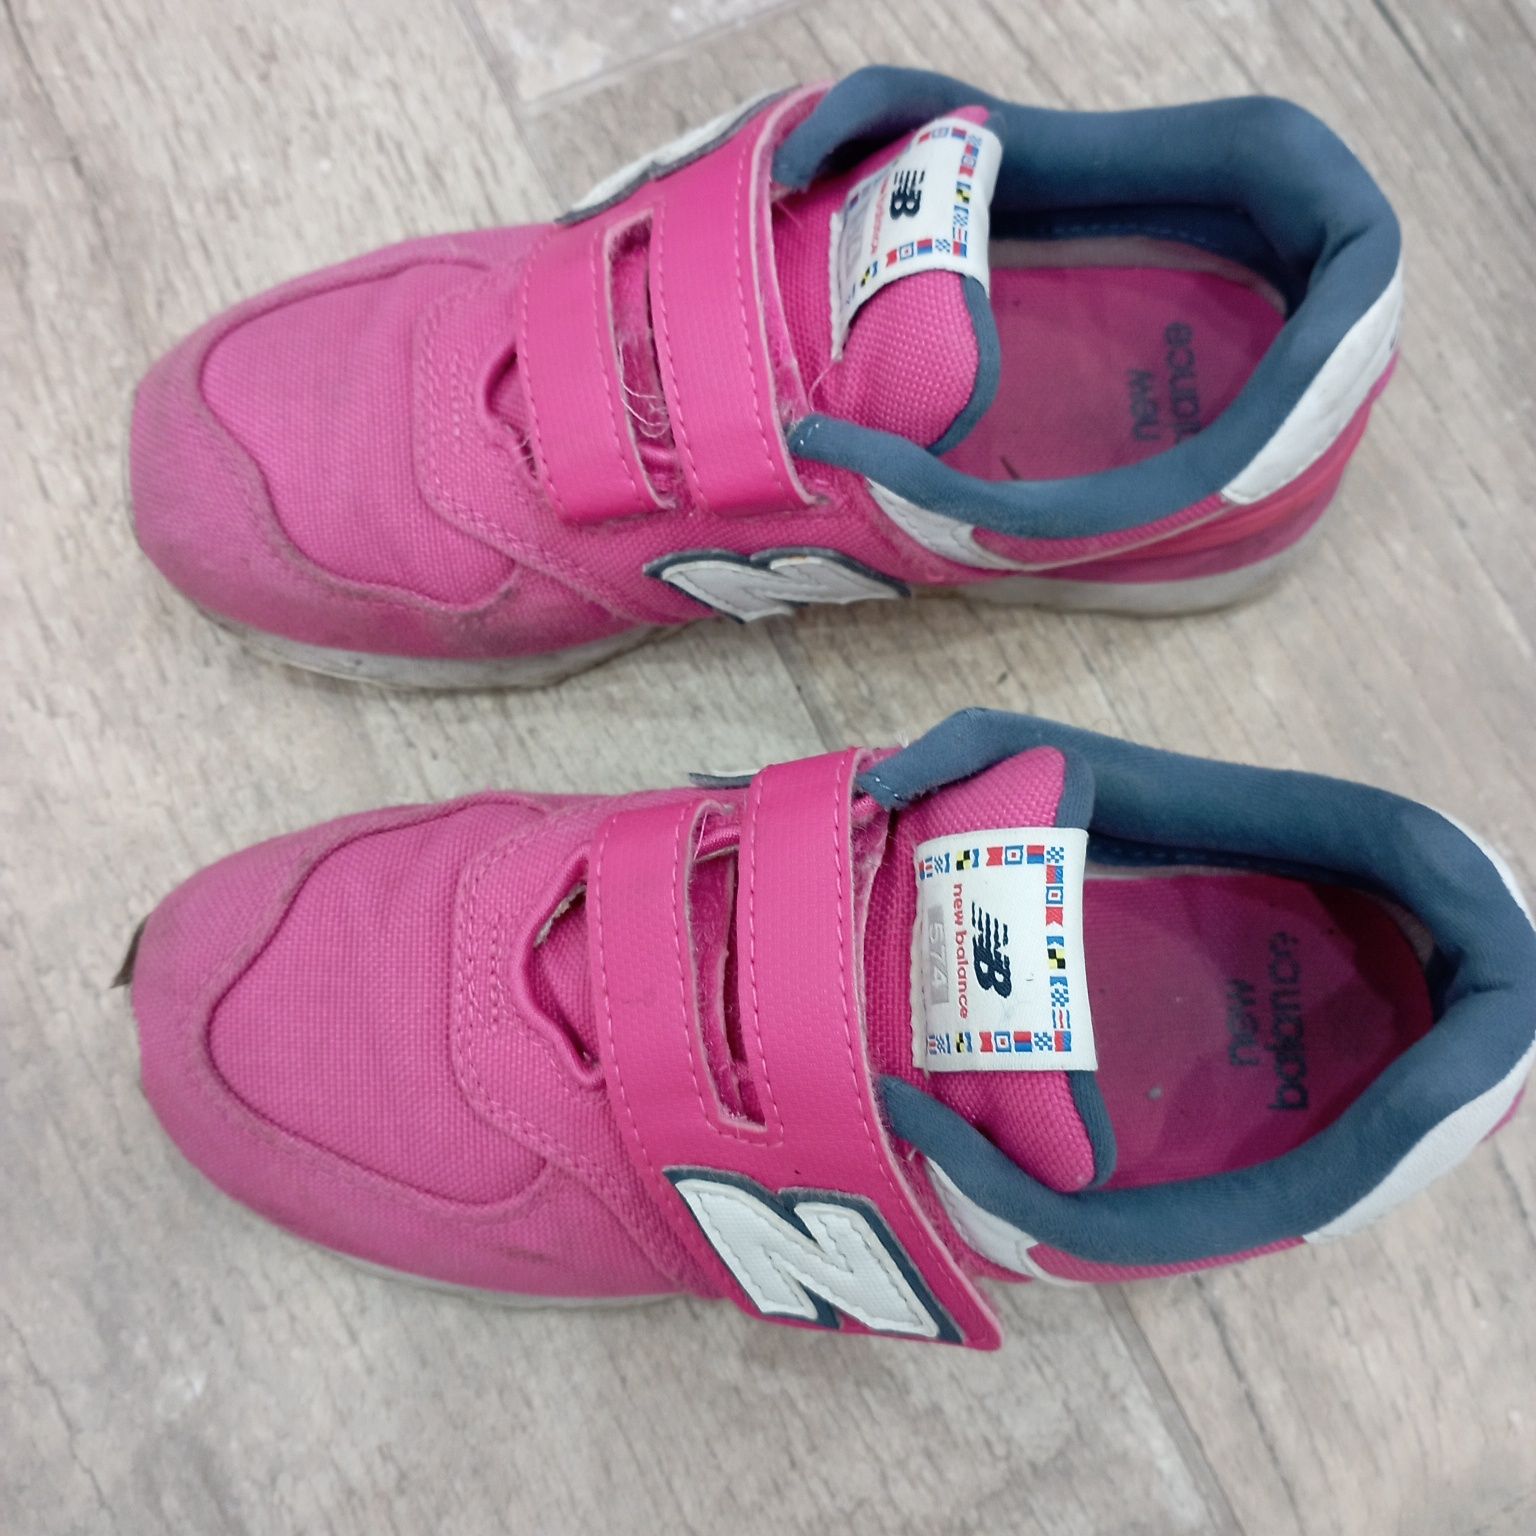 Adidaski New balance roz. 32